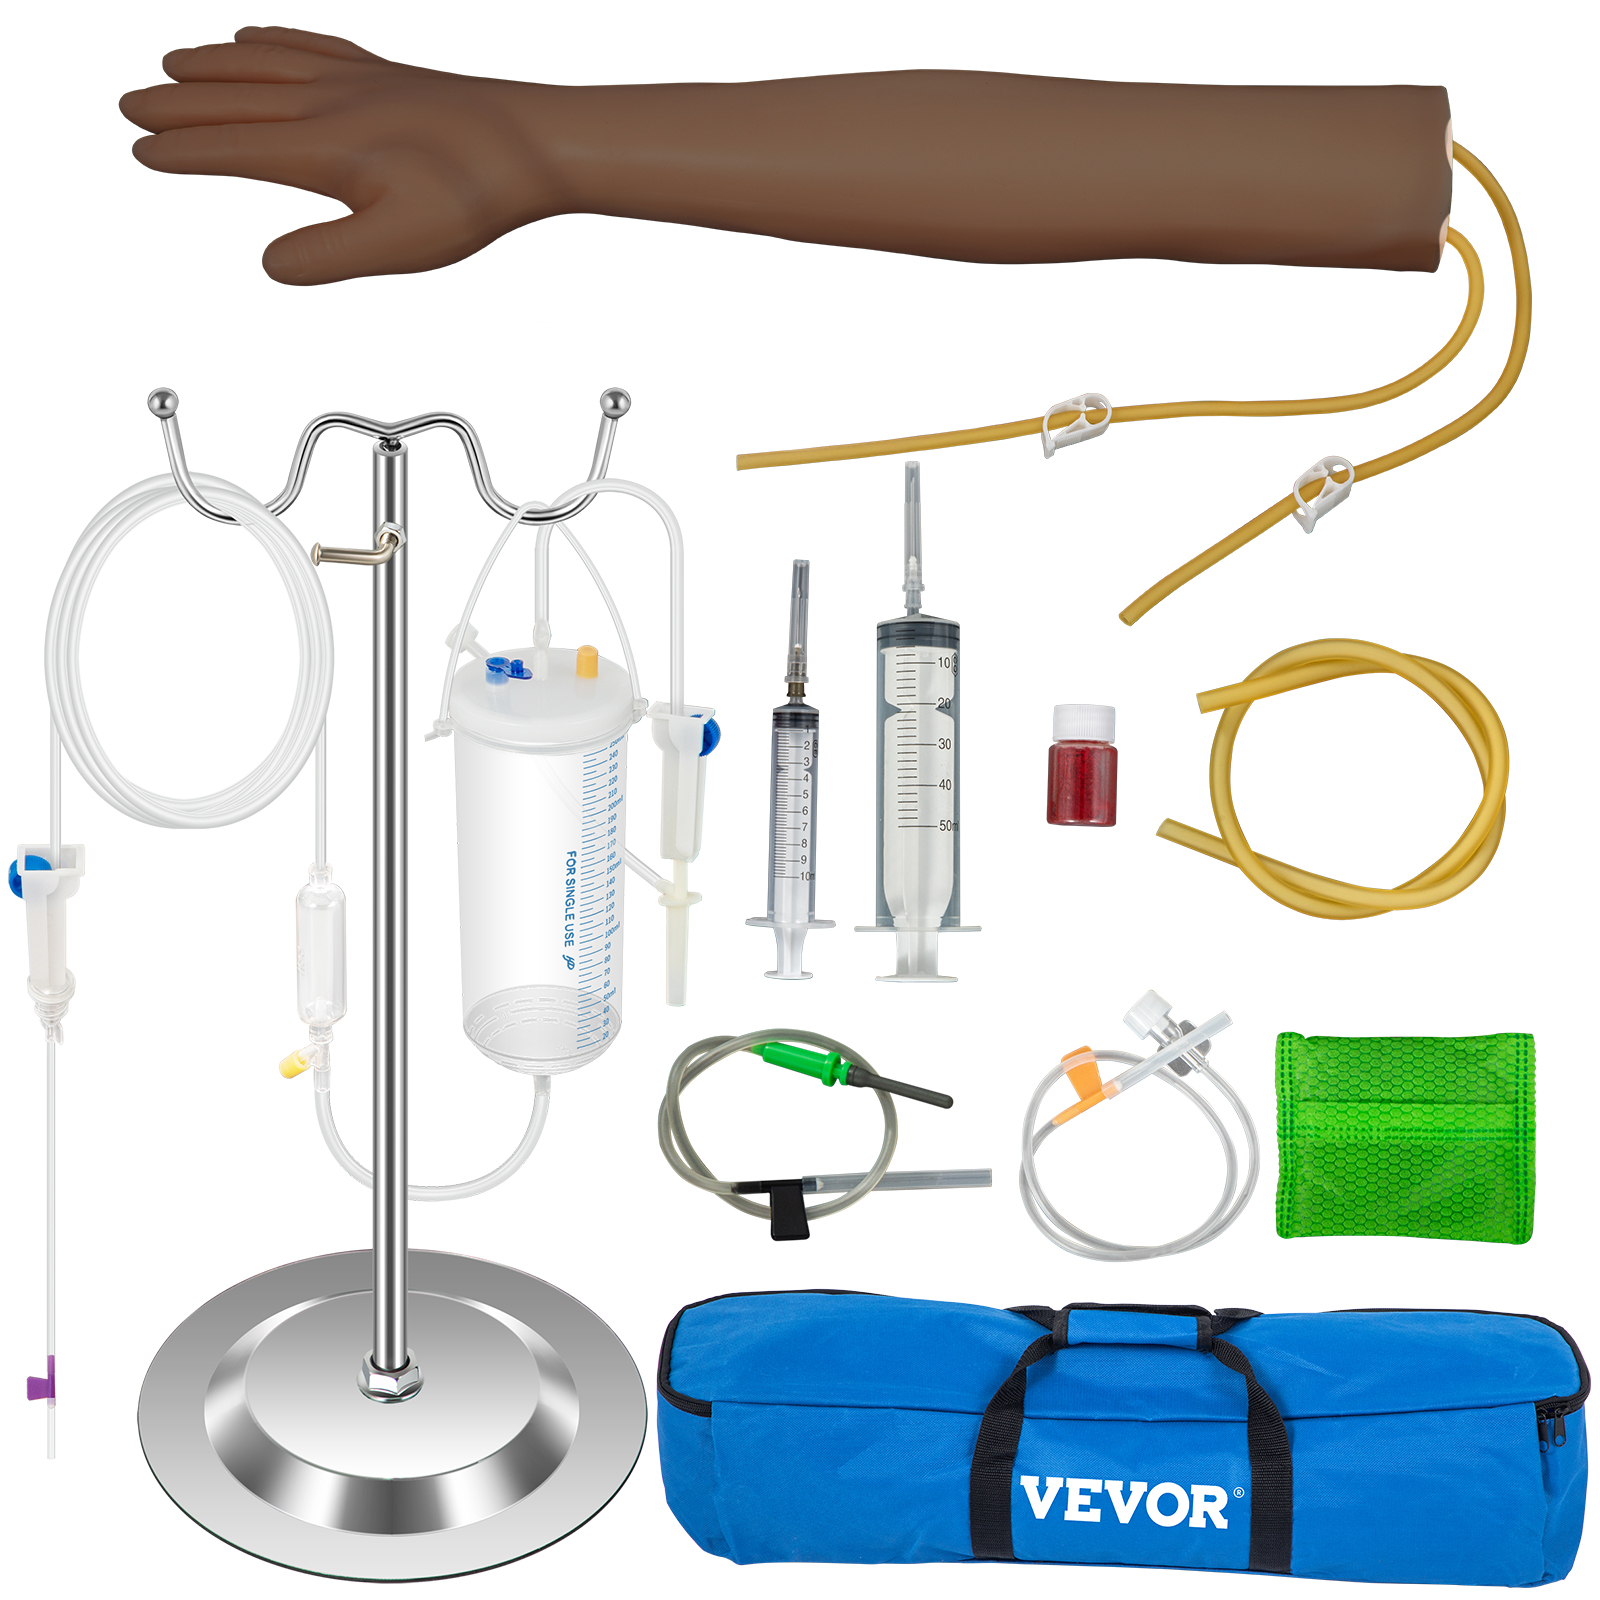 Vevor Intravenous Practice Arm Kit Phlebotomy Arm Pvc Dark Skin For Venipuncture от Vevor Many GEOs